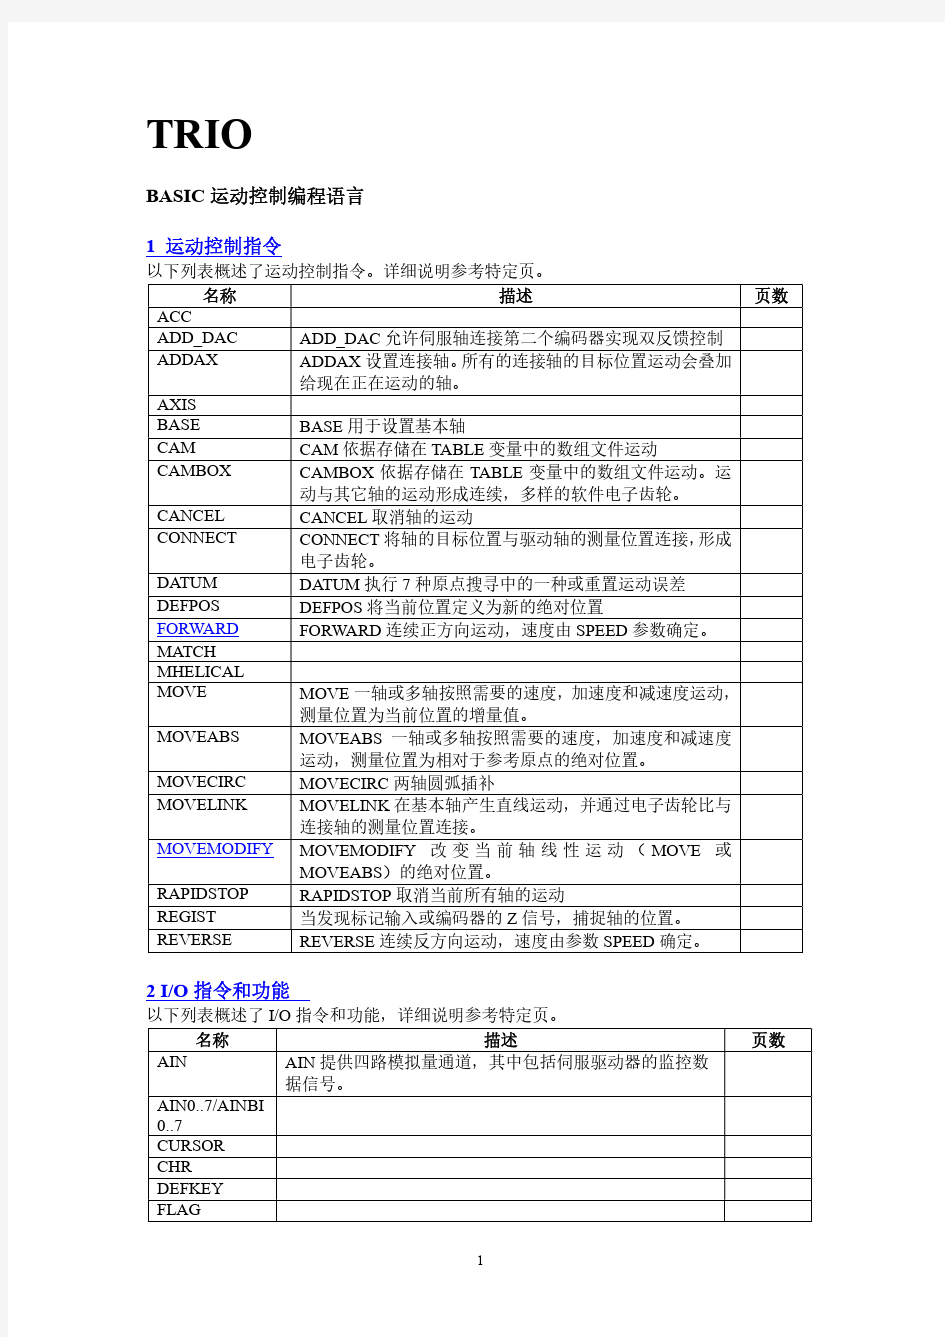 TRIO BASIC中文手册